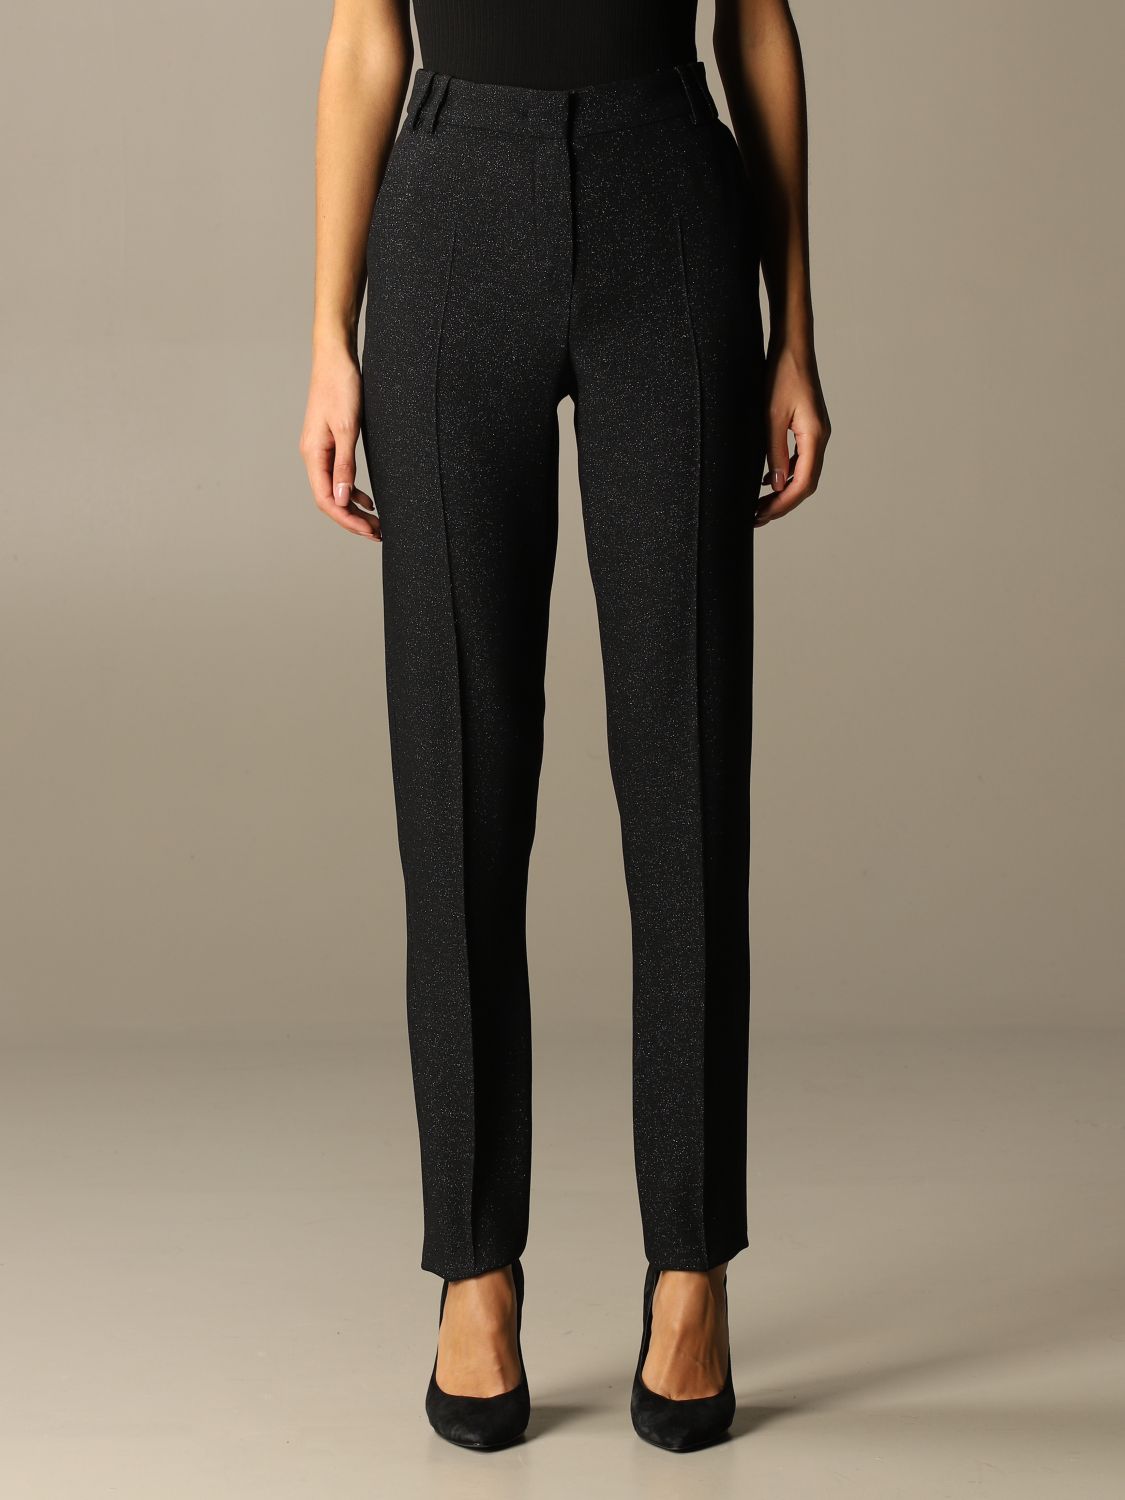 Buy EMPORIO ARMANI Regular Fit FlatFront Trousers  Black Color Women   AJIO LUXE